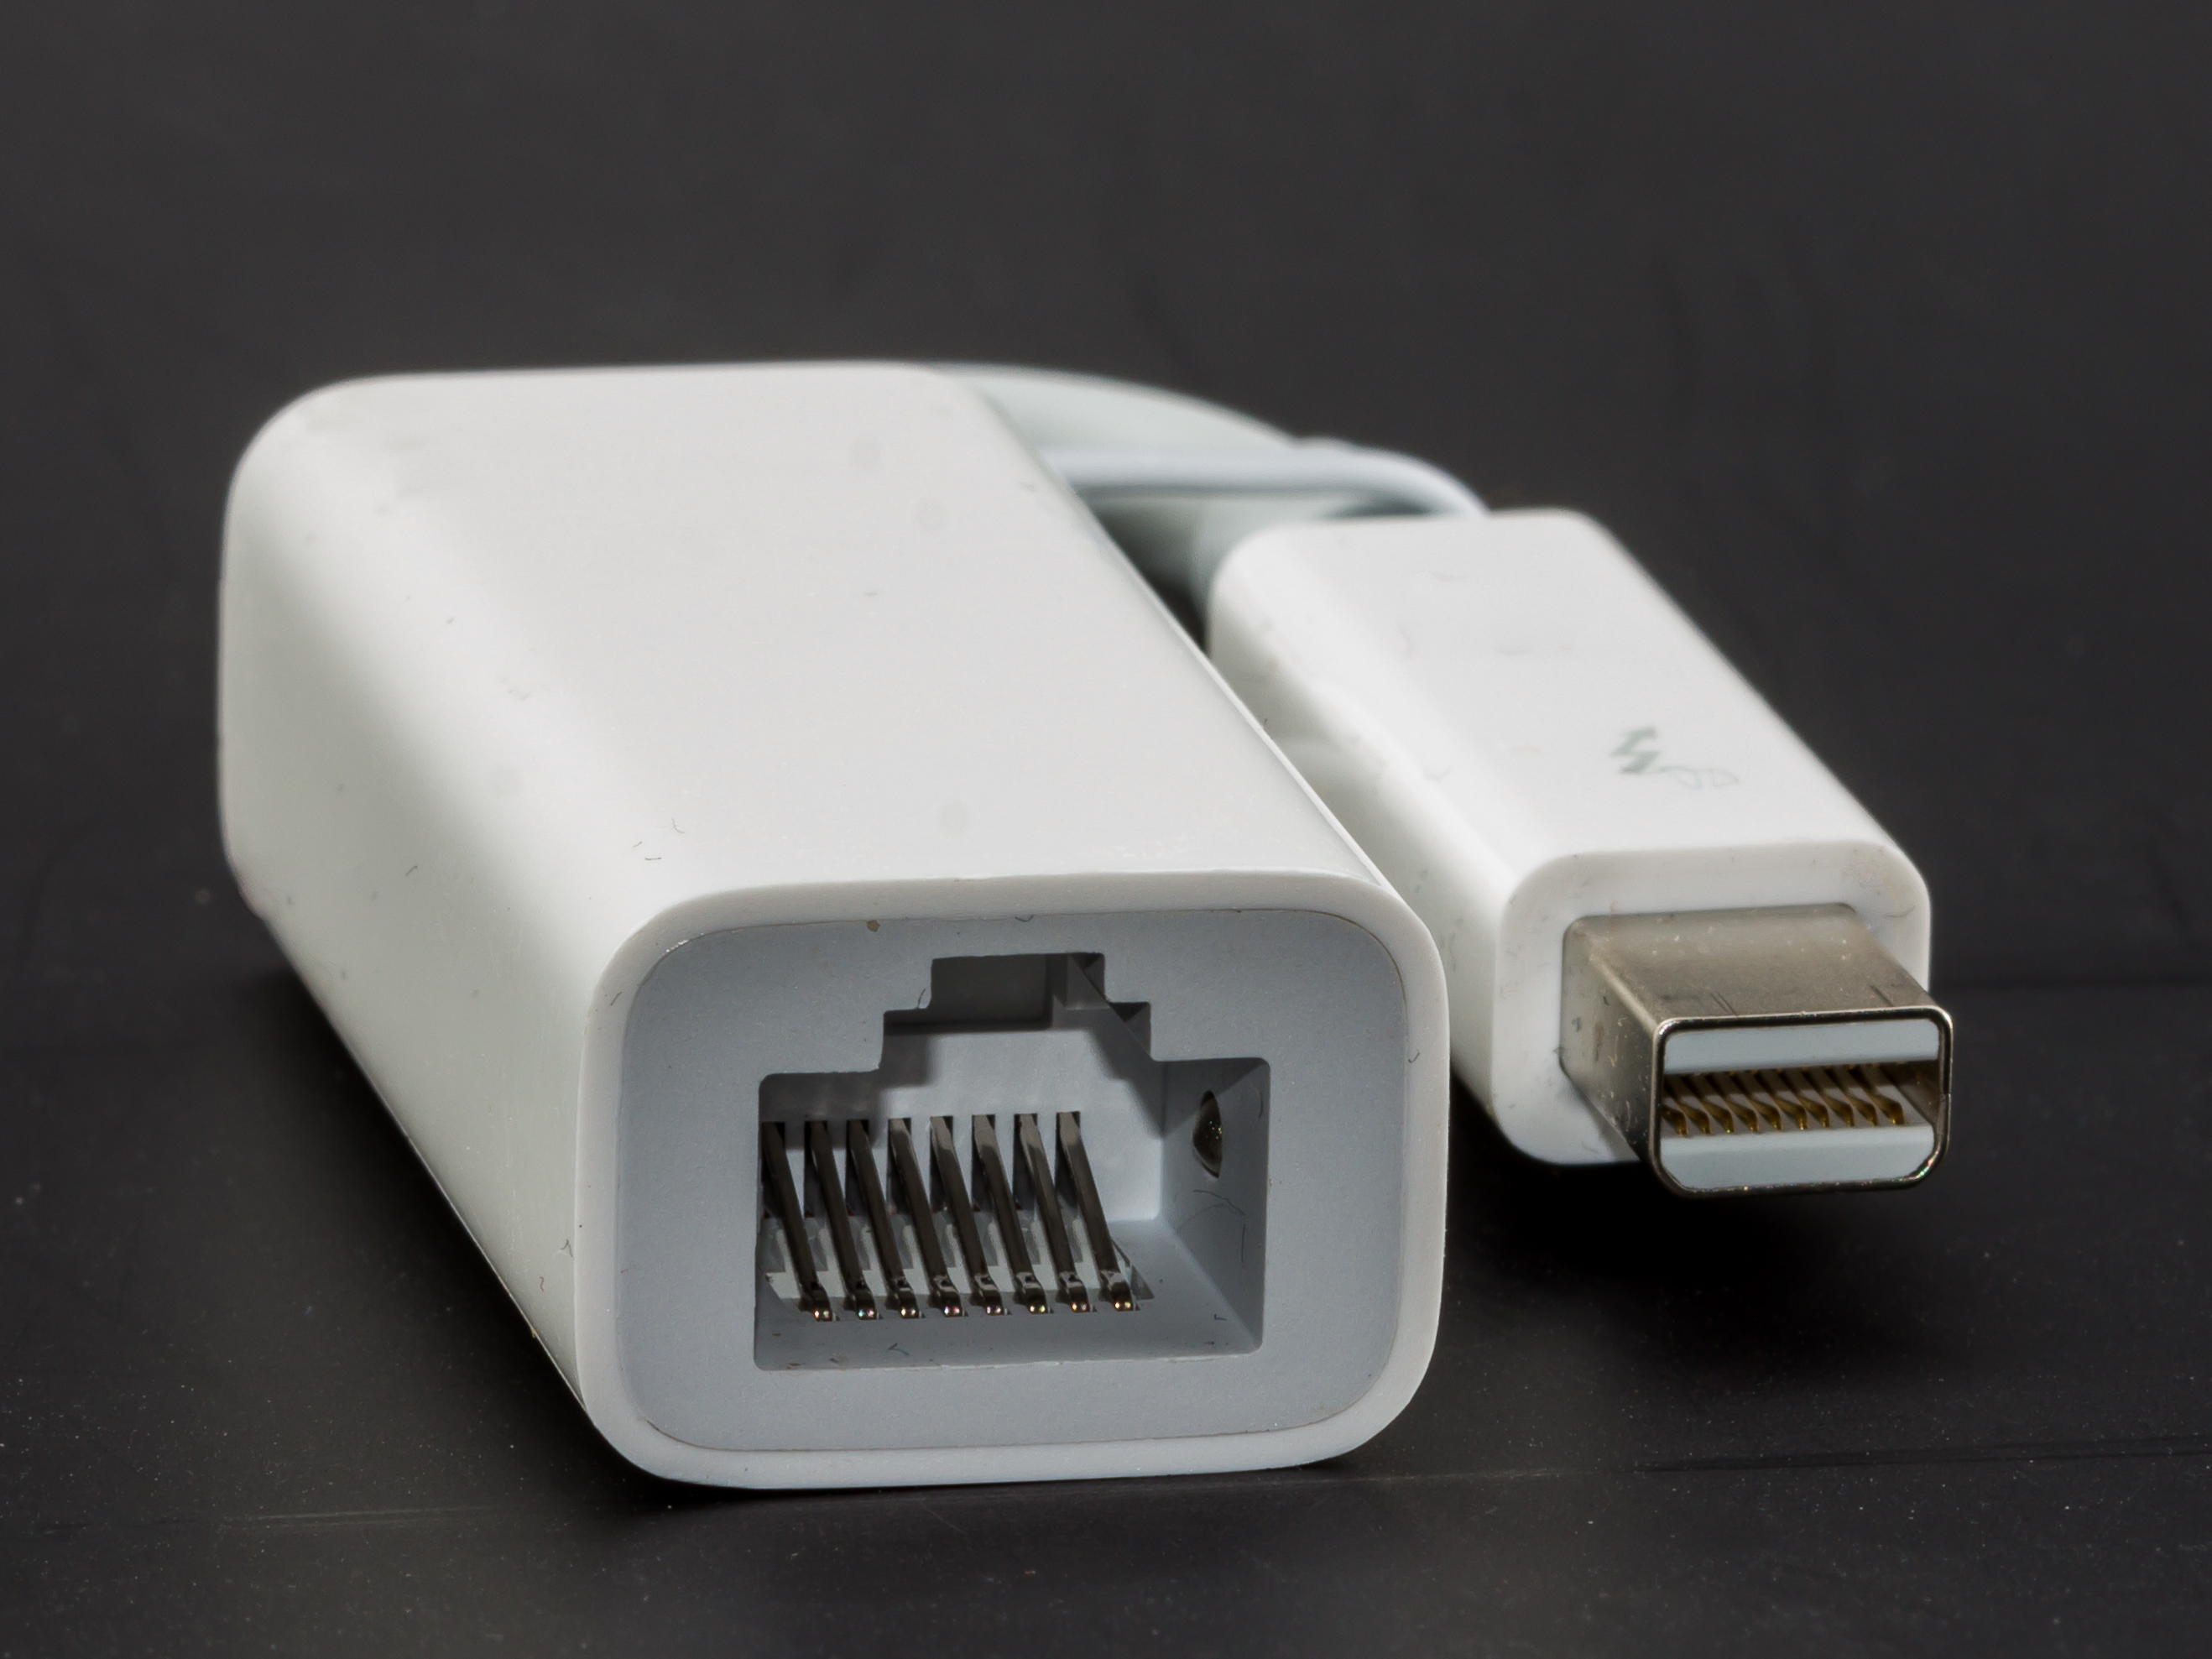 File:Thunderbolt-Ethernet-Adapter by Apple-7286.jpg - Wikimedia Commons